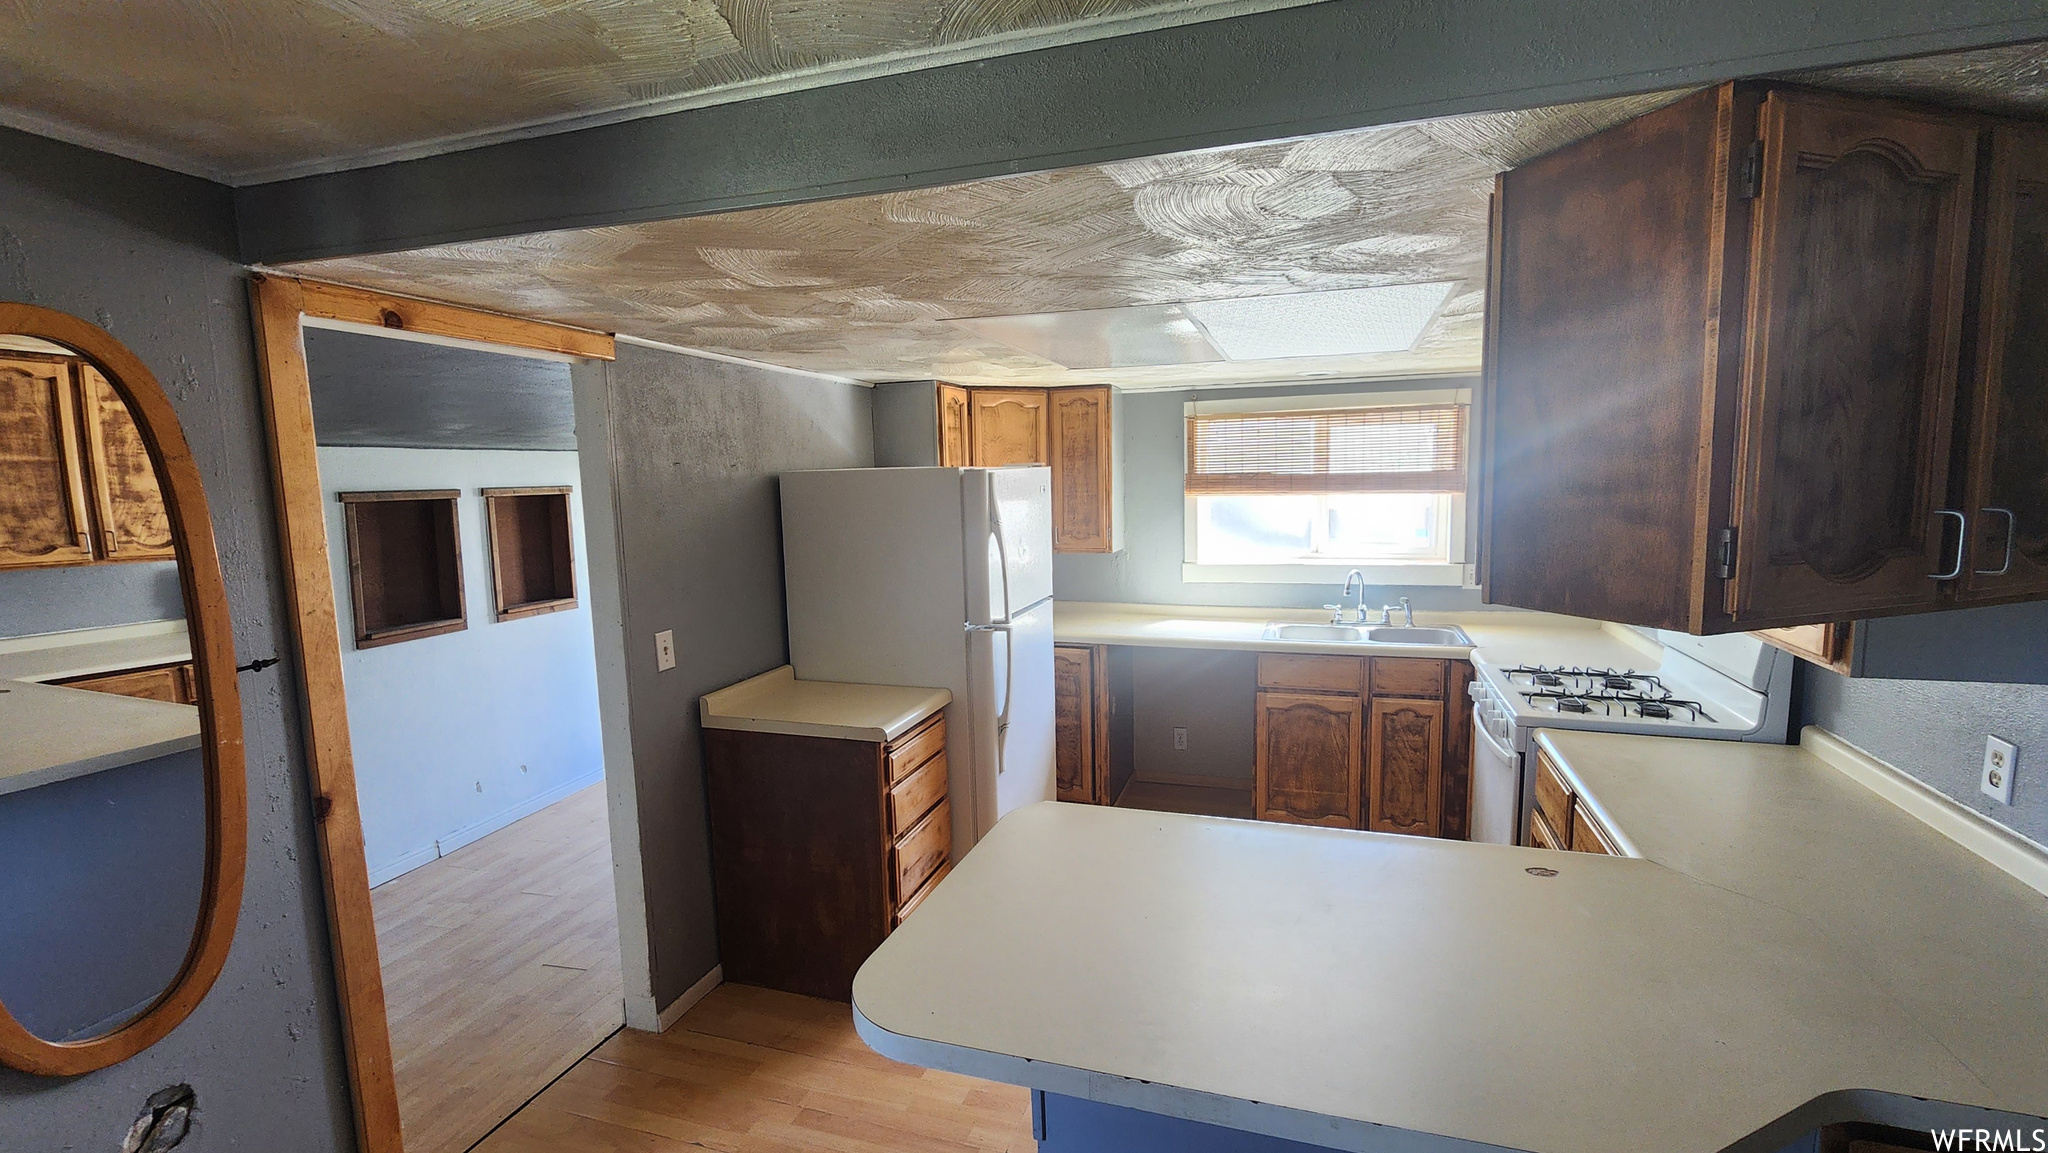 Kitchen with white fridge, light countertops, gas stove, and light hardwood flooring